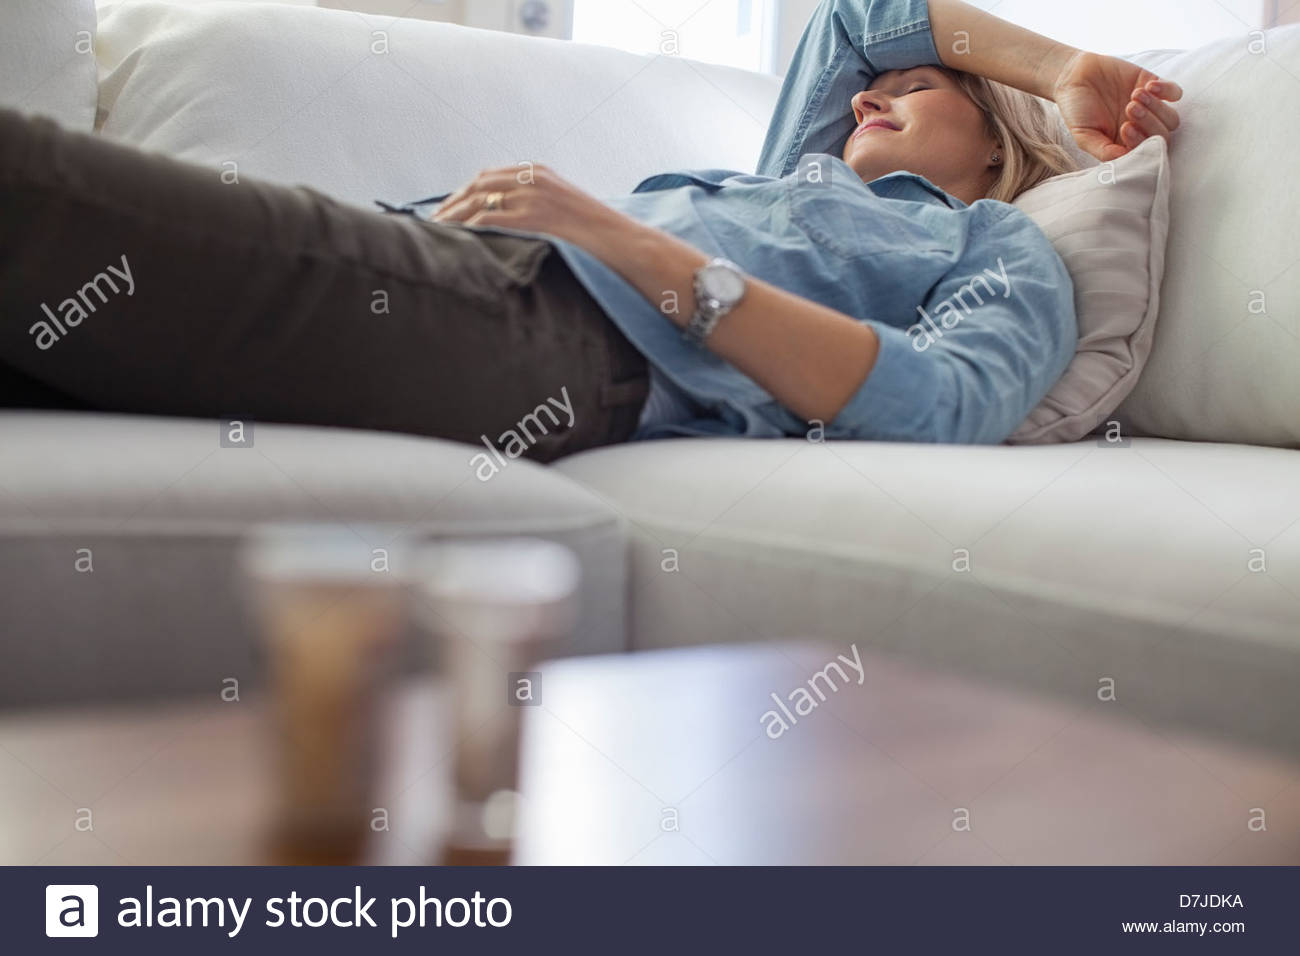 Woman with headache sleeping on sofa Stock Photo